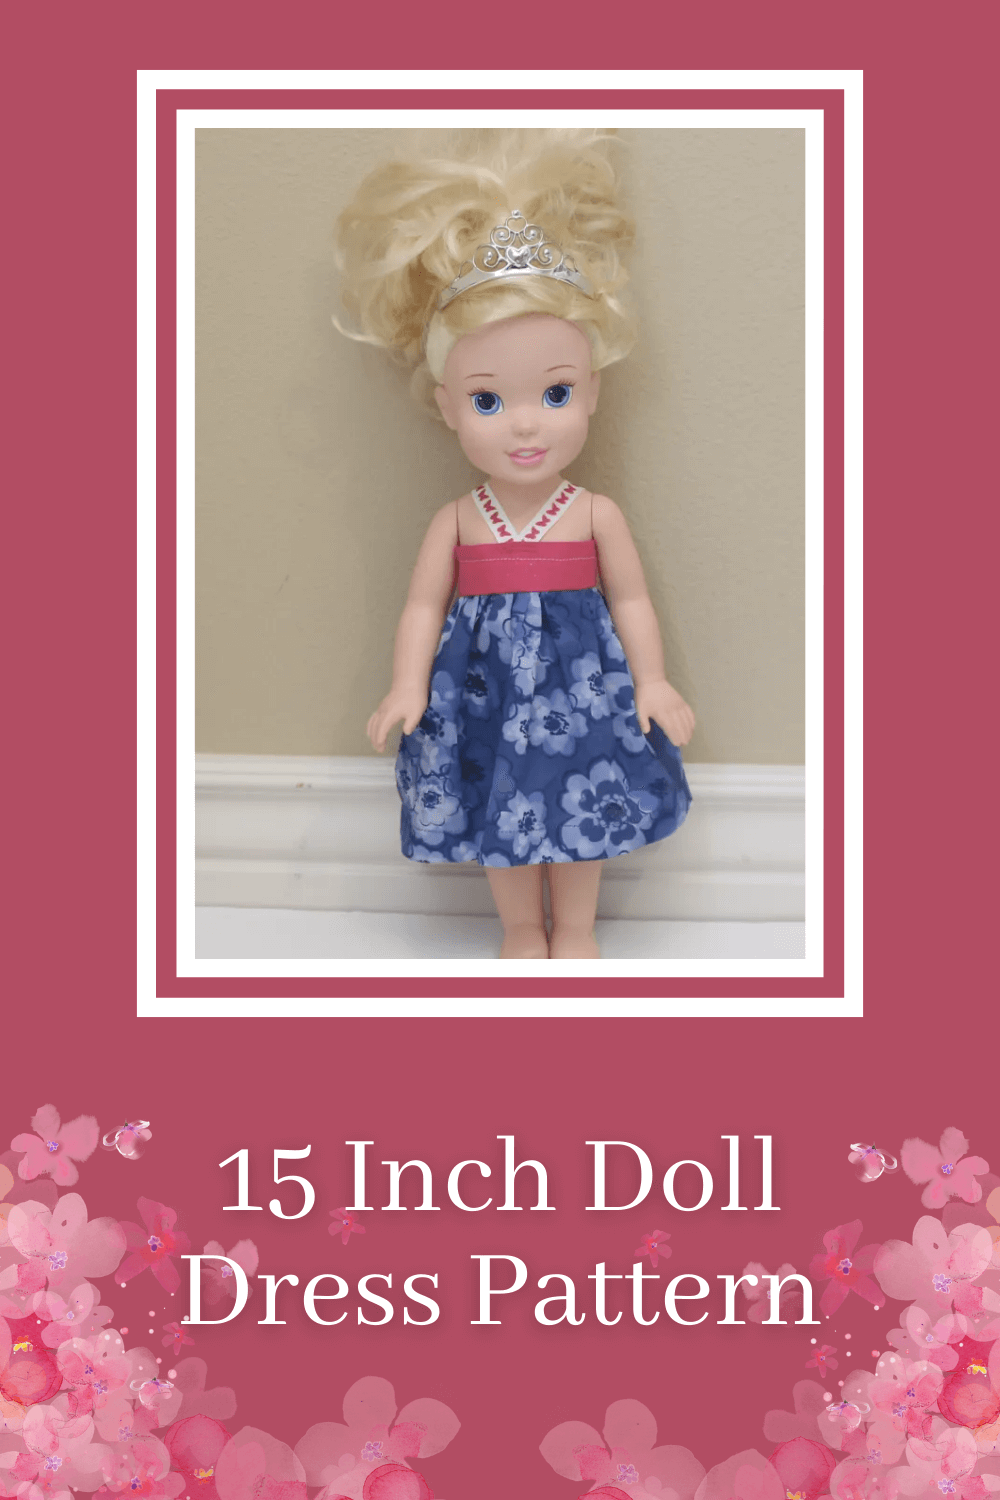 15 Inch Doll Dress Pattern | FREE Doll Dress Pattern